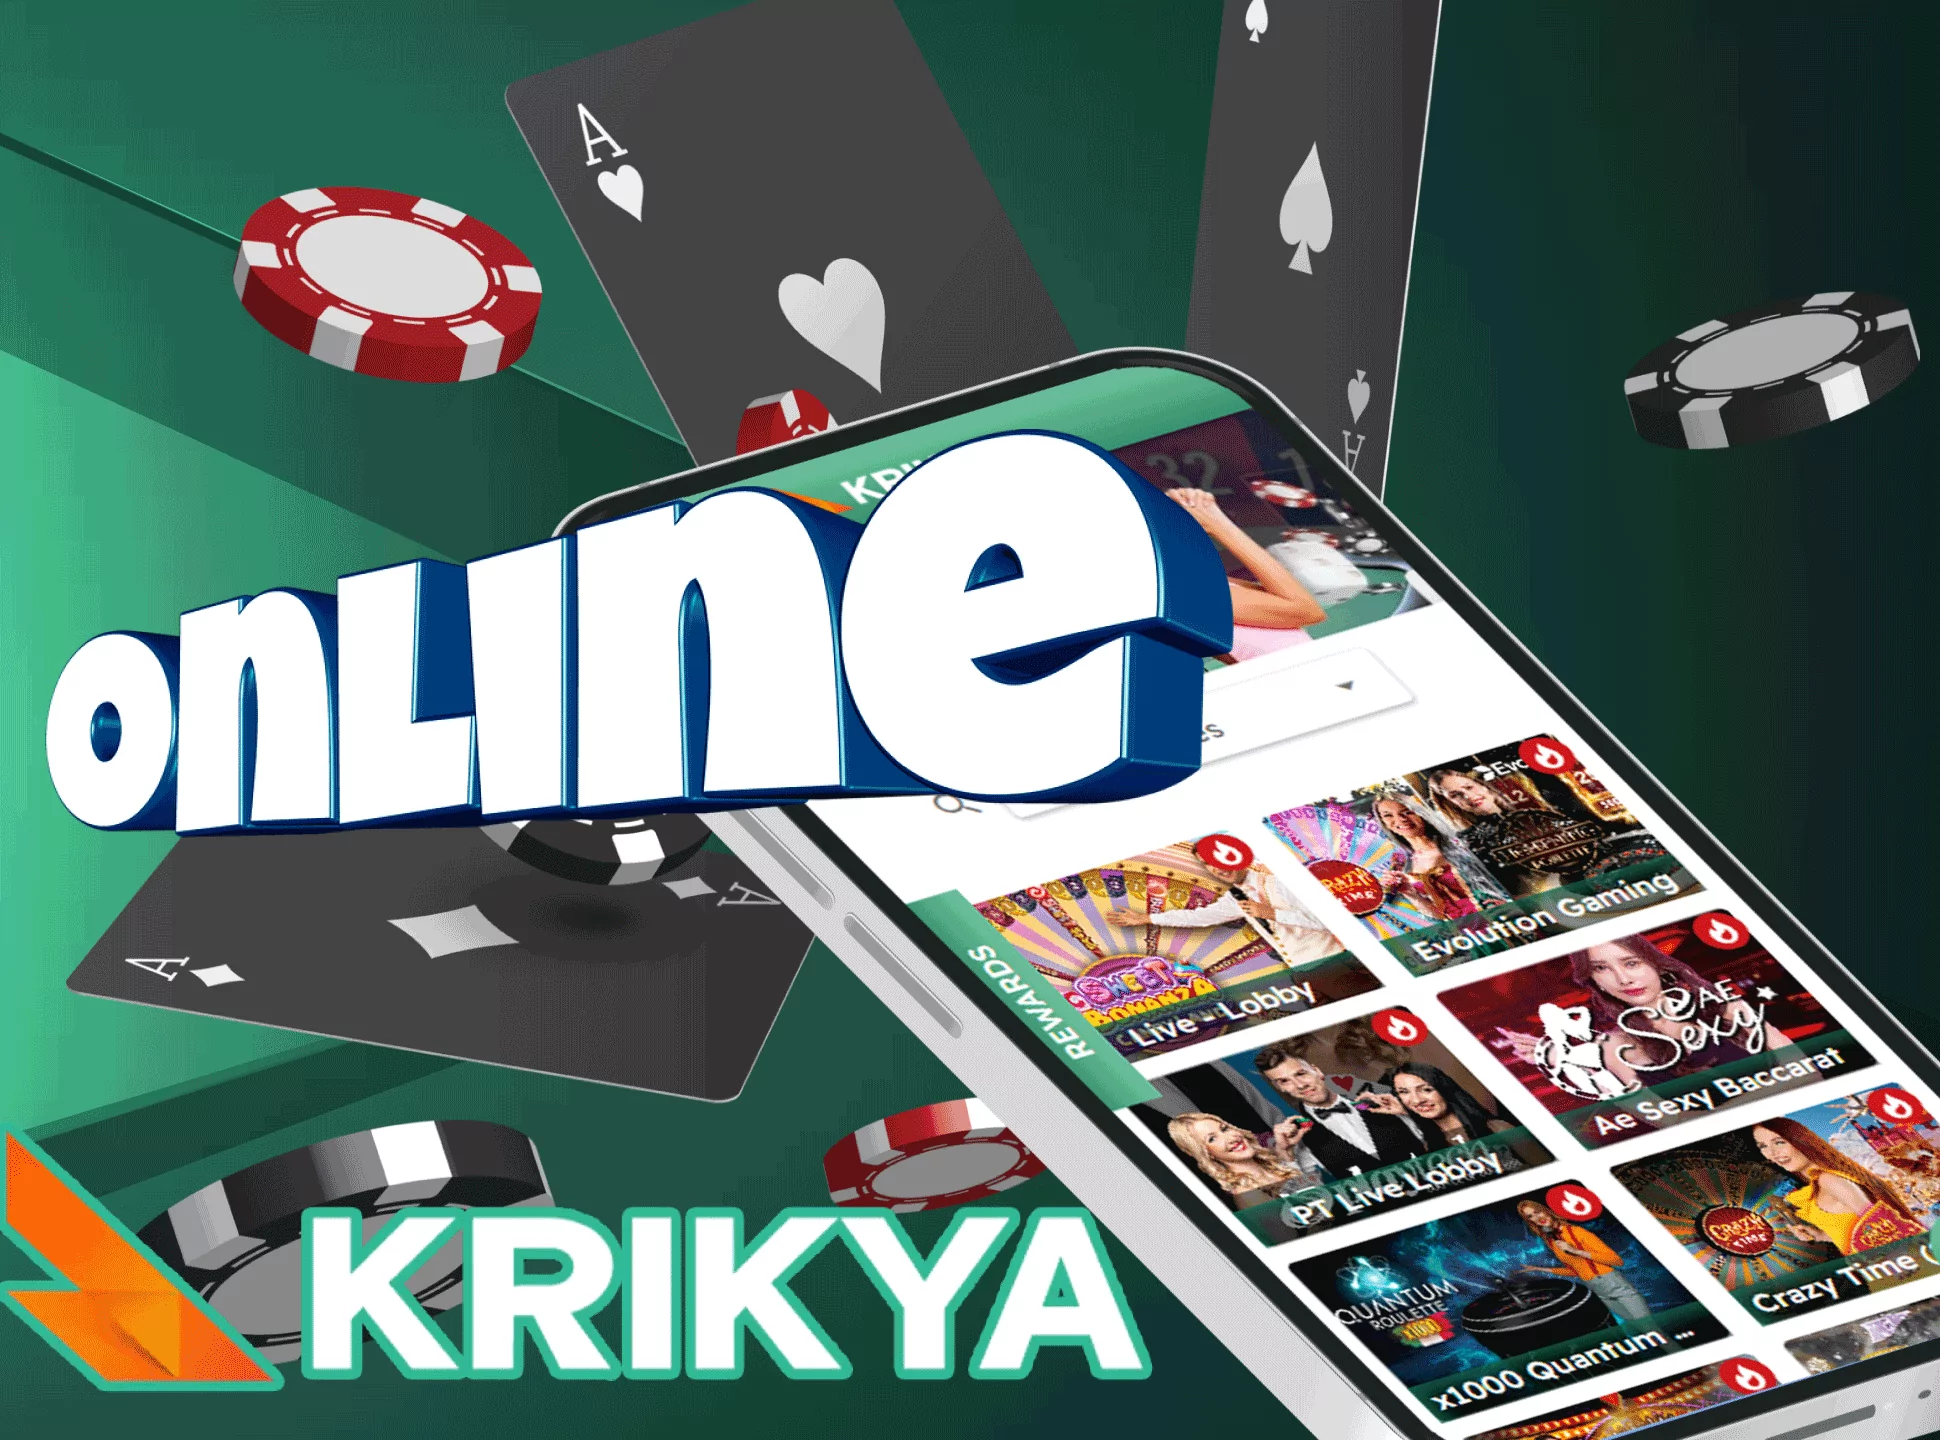 Krikya offers online casino entertainments.